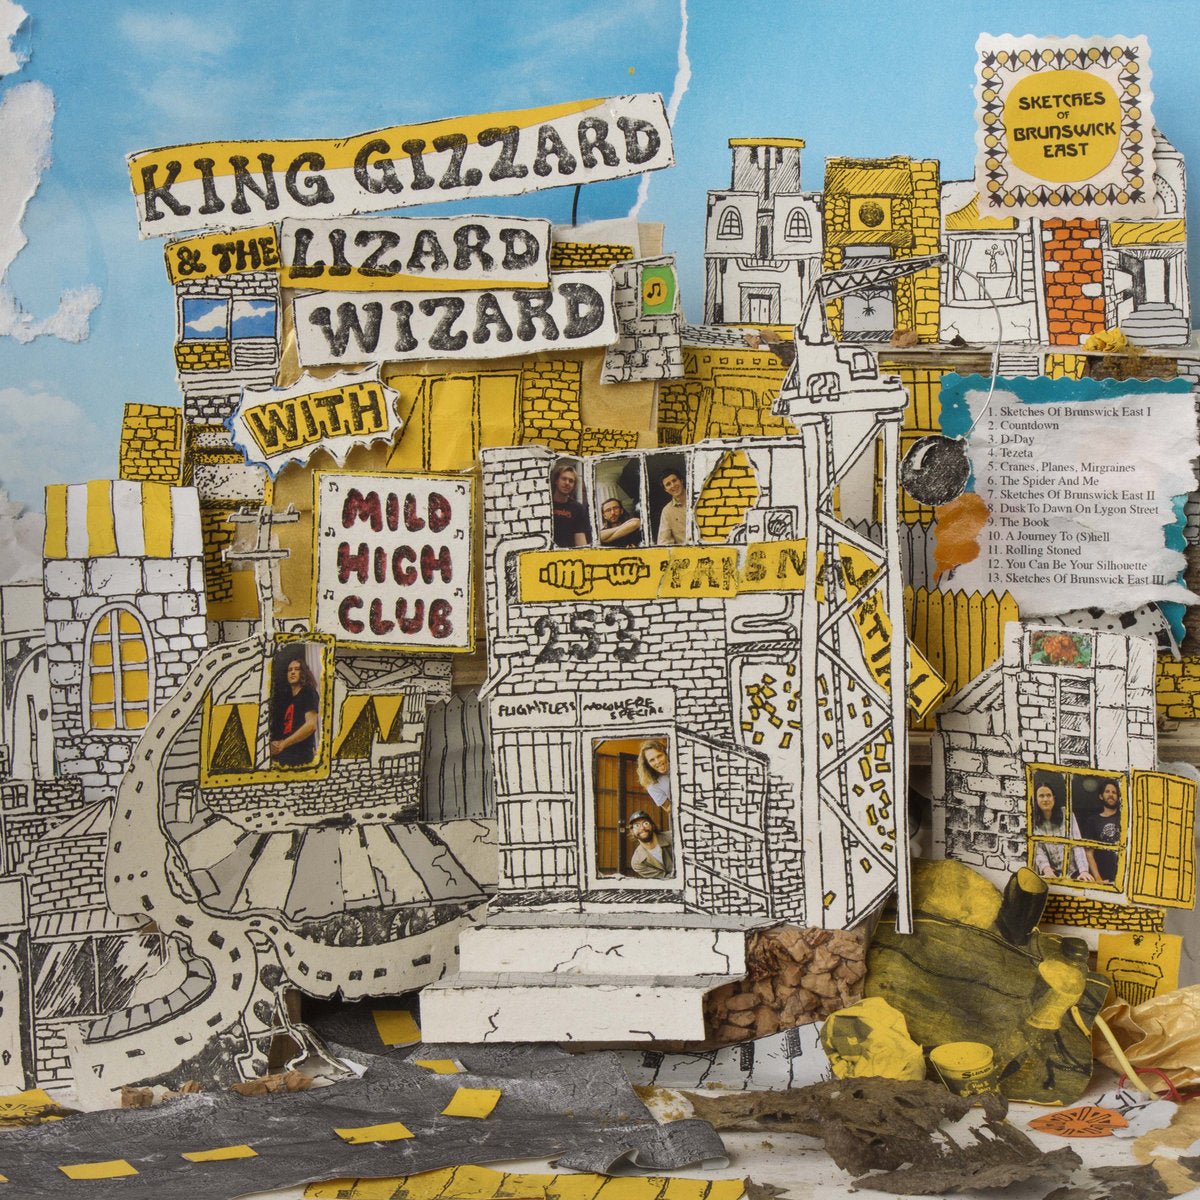 King Gizzard & The Lizard Wizard / Mild High Club - Sketches of Brunswick East LP - Vinyl - Heavenly